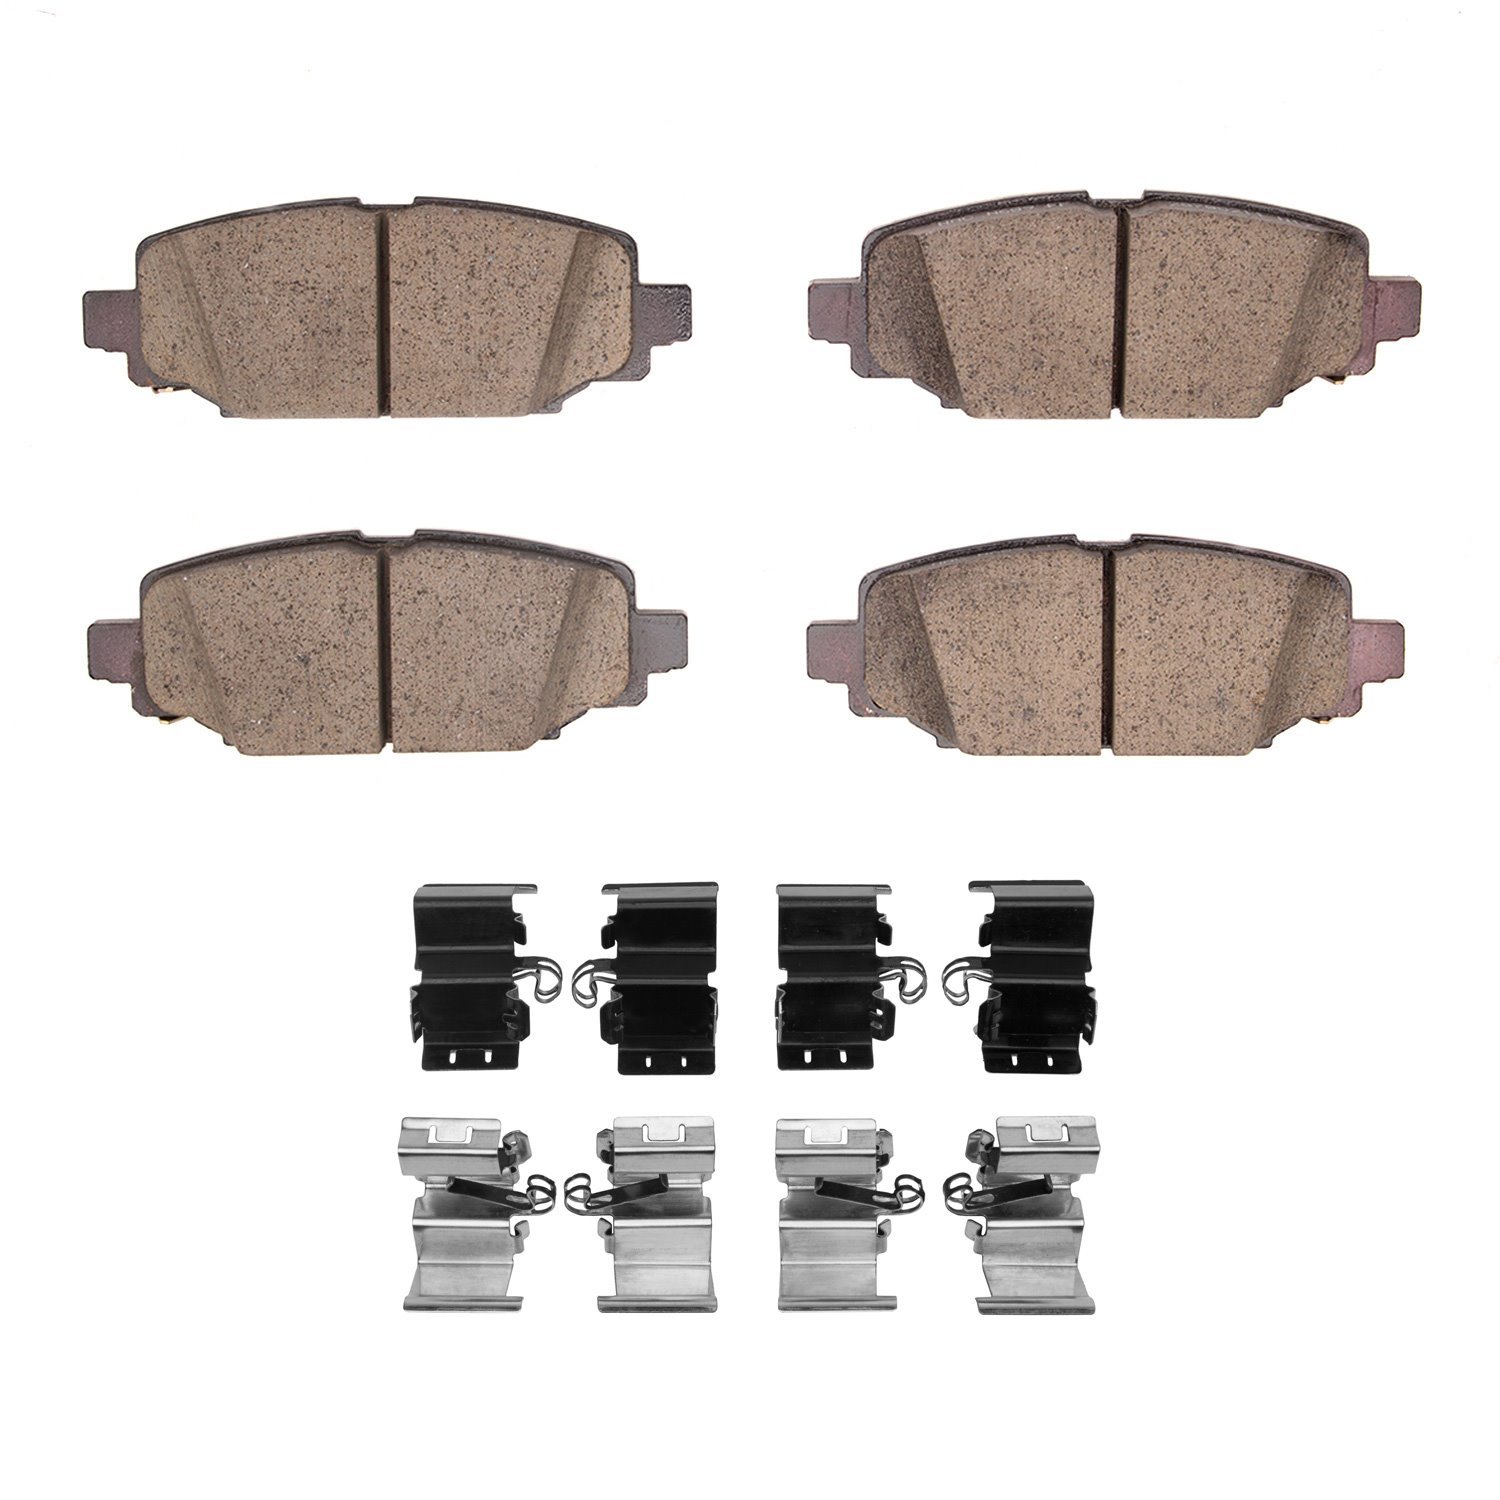 1551-2172-01 5000 Advanced Ceramic Brake Pads & Hardware Kit, Fits Select Mopar, Position: Rear